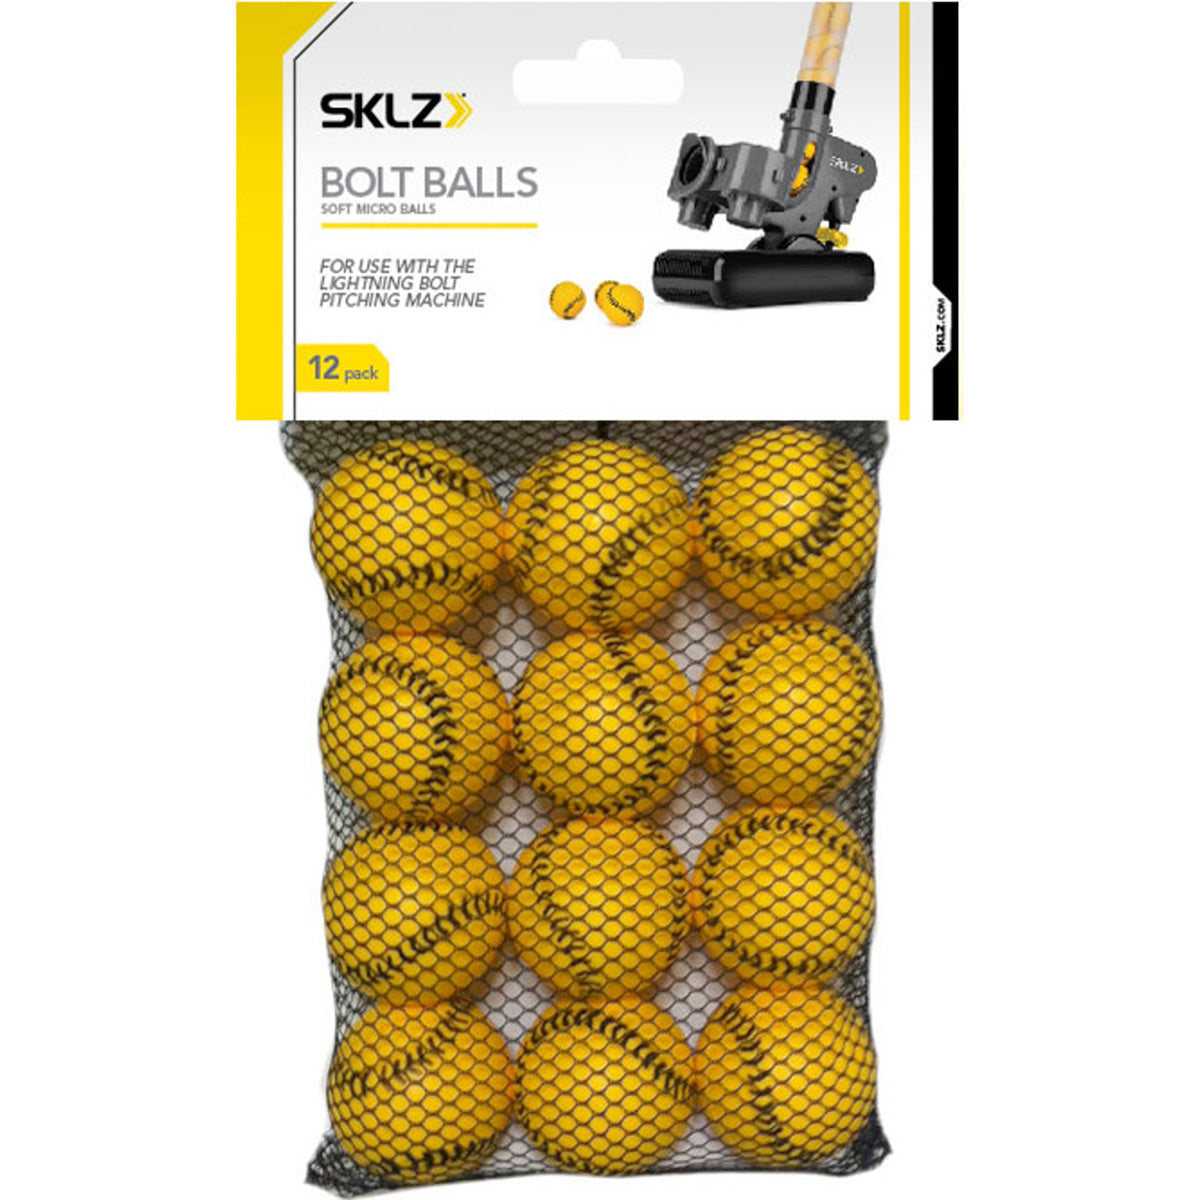 SKLZ Bolt Balls Soft Micro Training Balls - 12 Pack - Yellow SKLZ